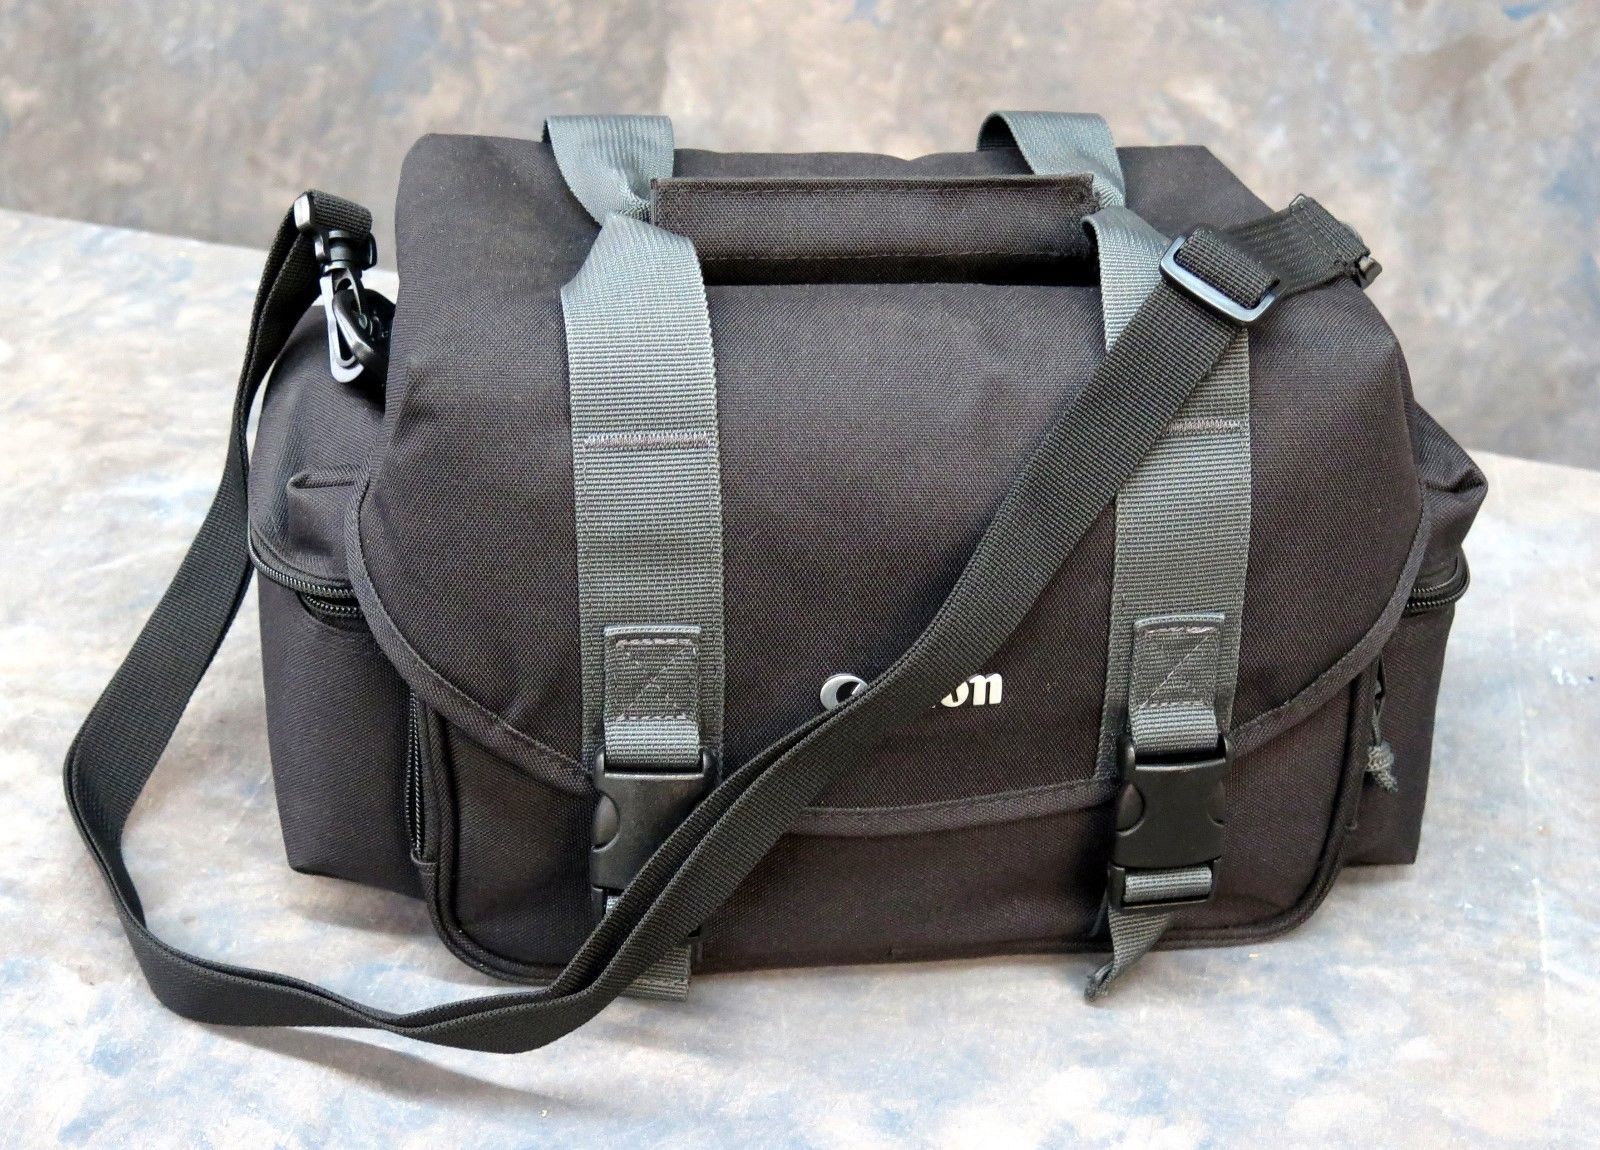 Canon DSLR or Film Camera Bag # 4603 (fits Canon Nikon, etc), Used 14x8x8 inchs - $14.95